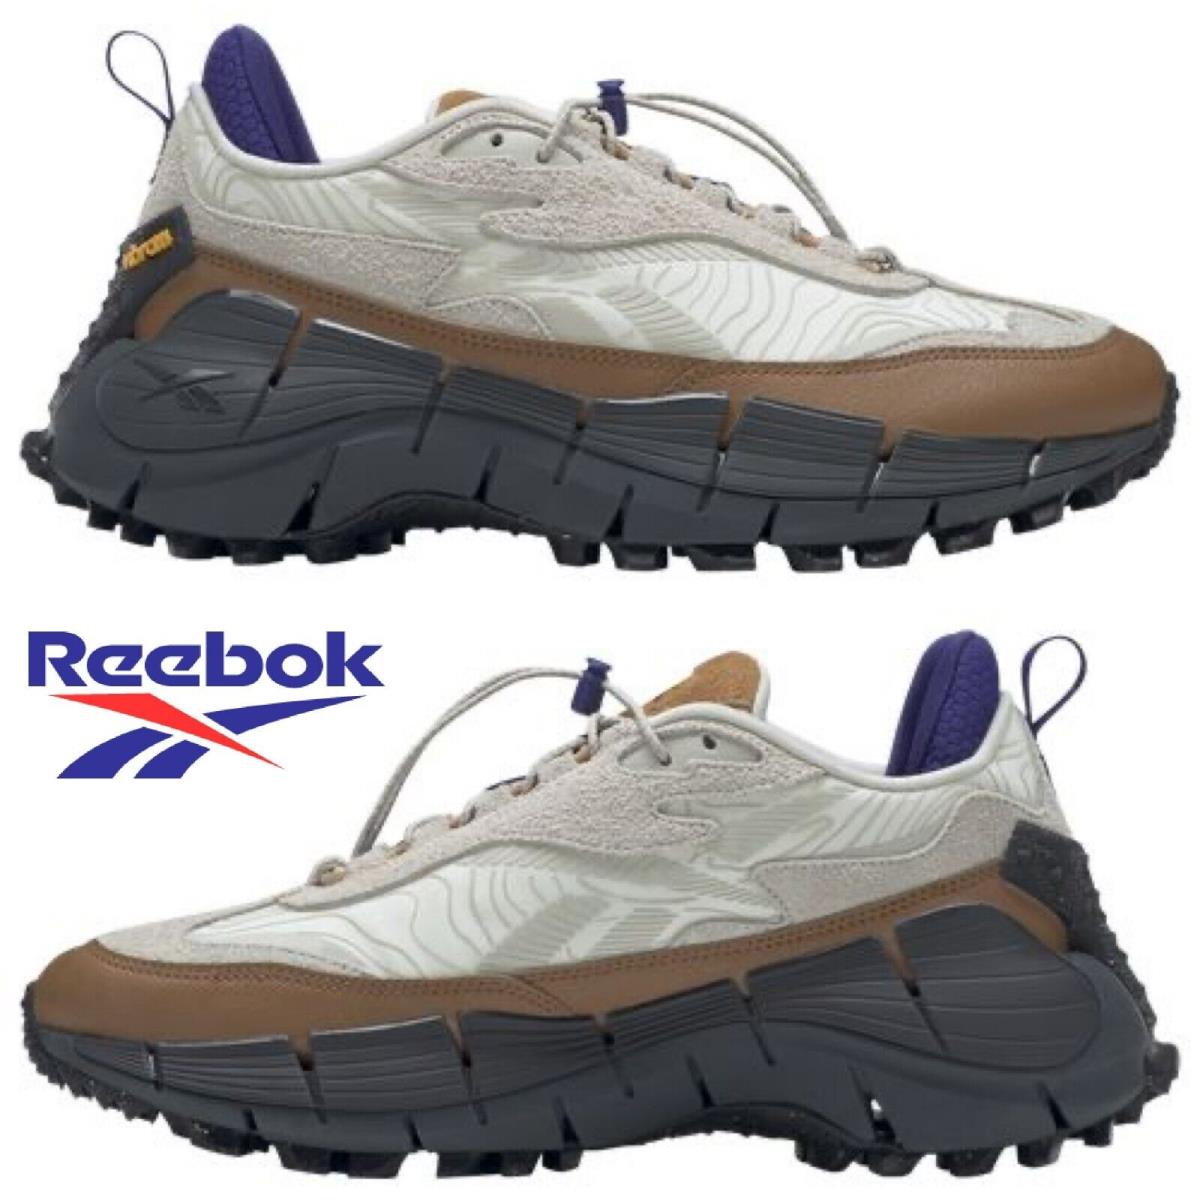 Reebok Zig Kinetica 2.5 Edge Men`s Sneakers Running Training Shoes Casual Sport - Brown , Chalk/Alabaster Manufacturer